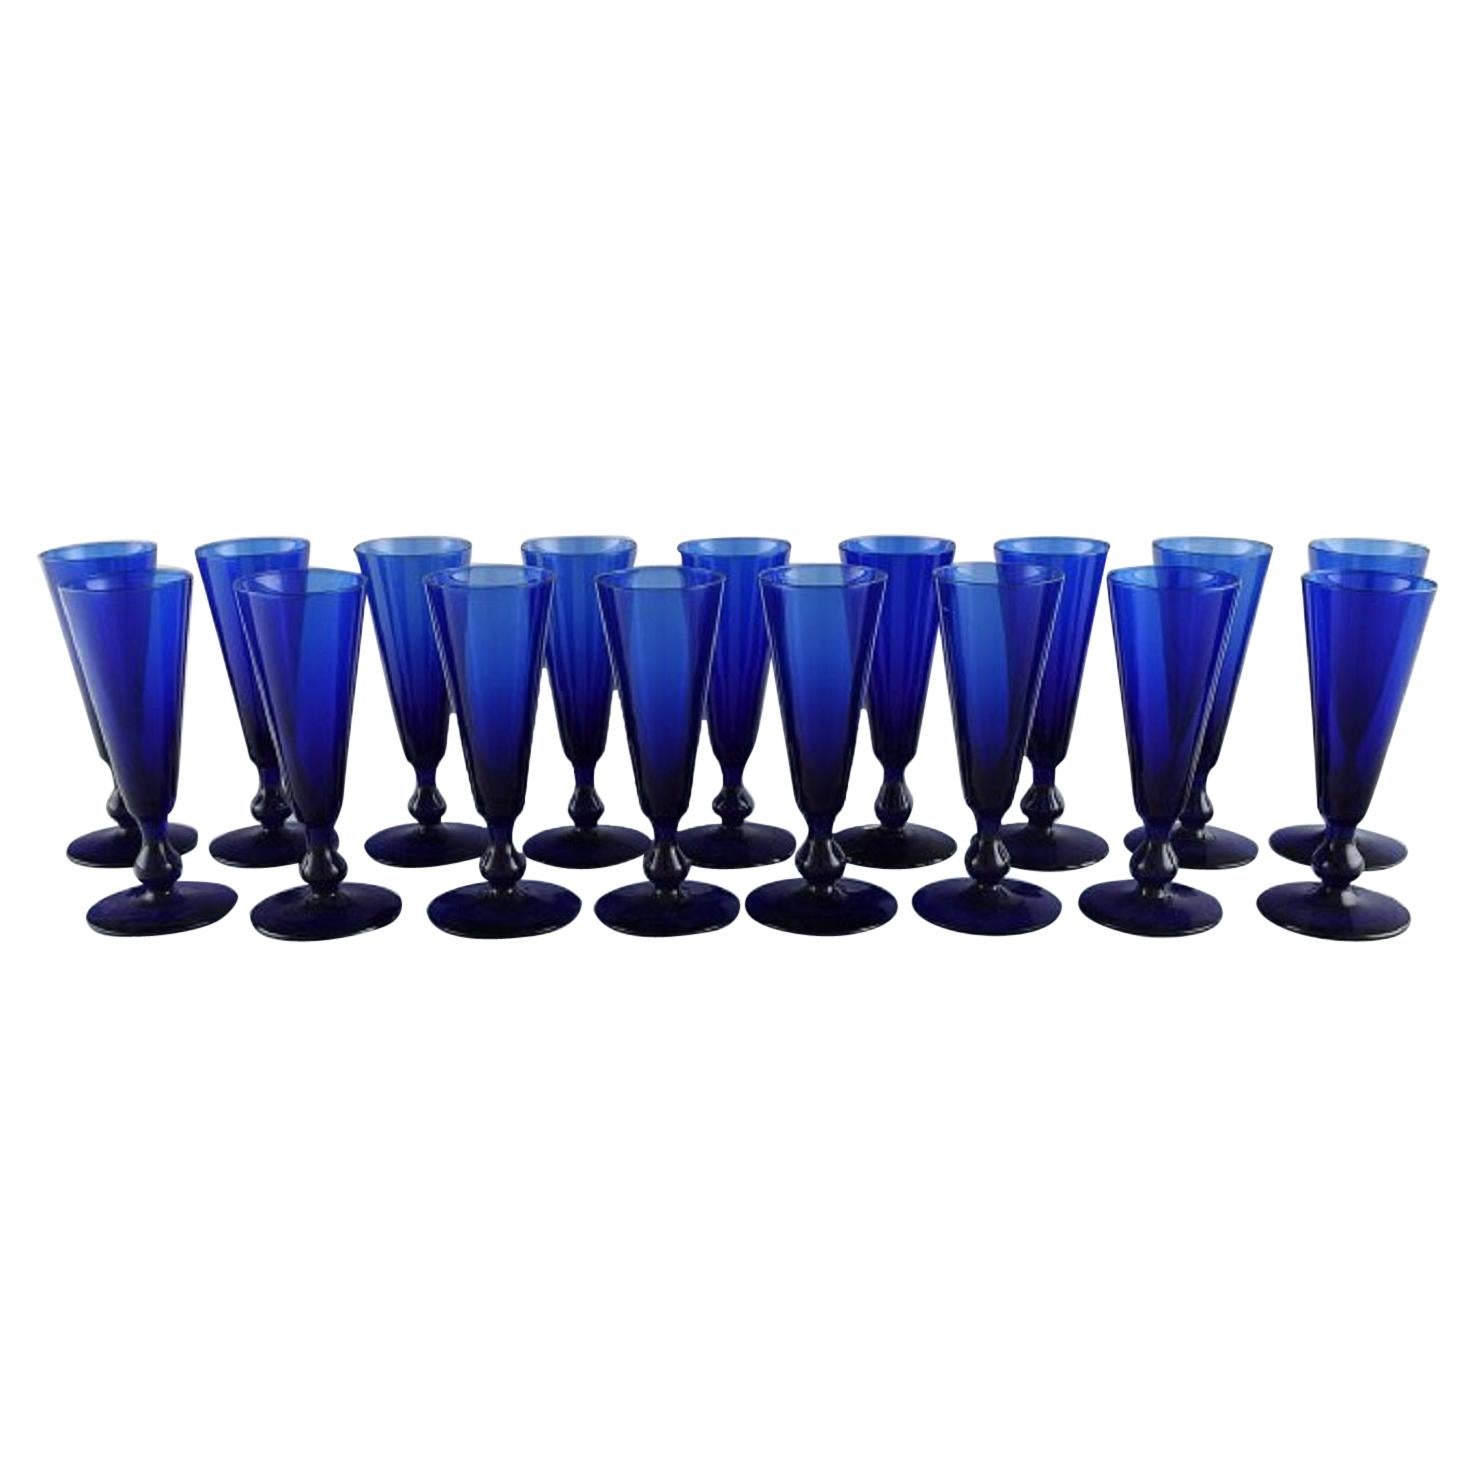 Monica Bratt for Reijmyre, 17 Small Cocktail Glasses in Blue Mouth Blown Glass